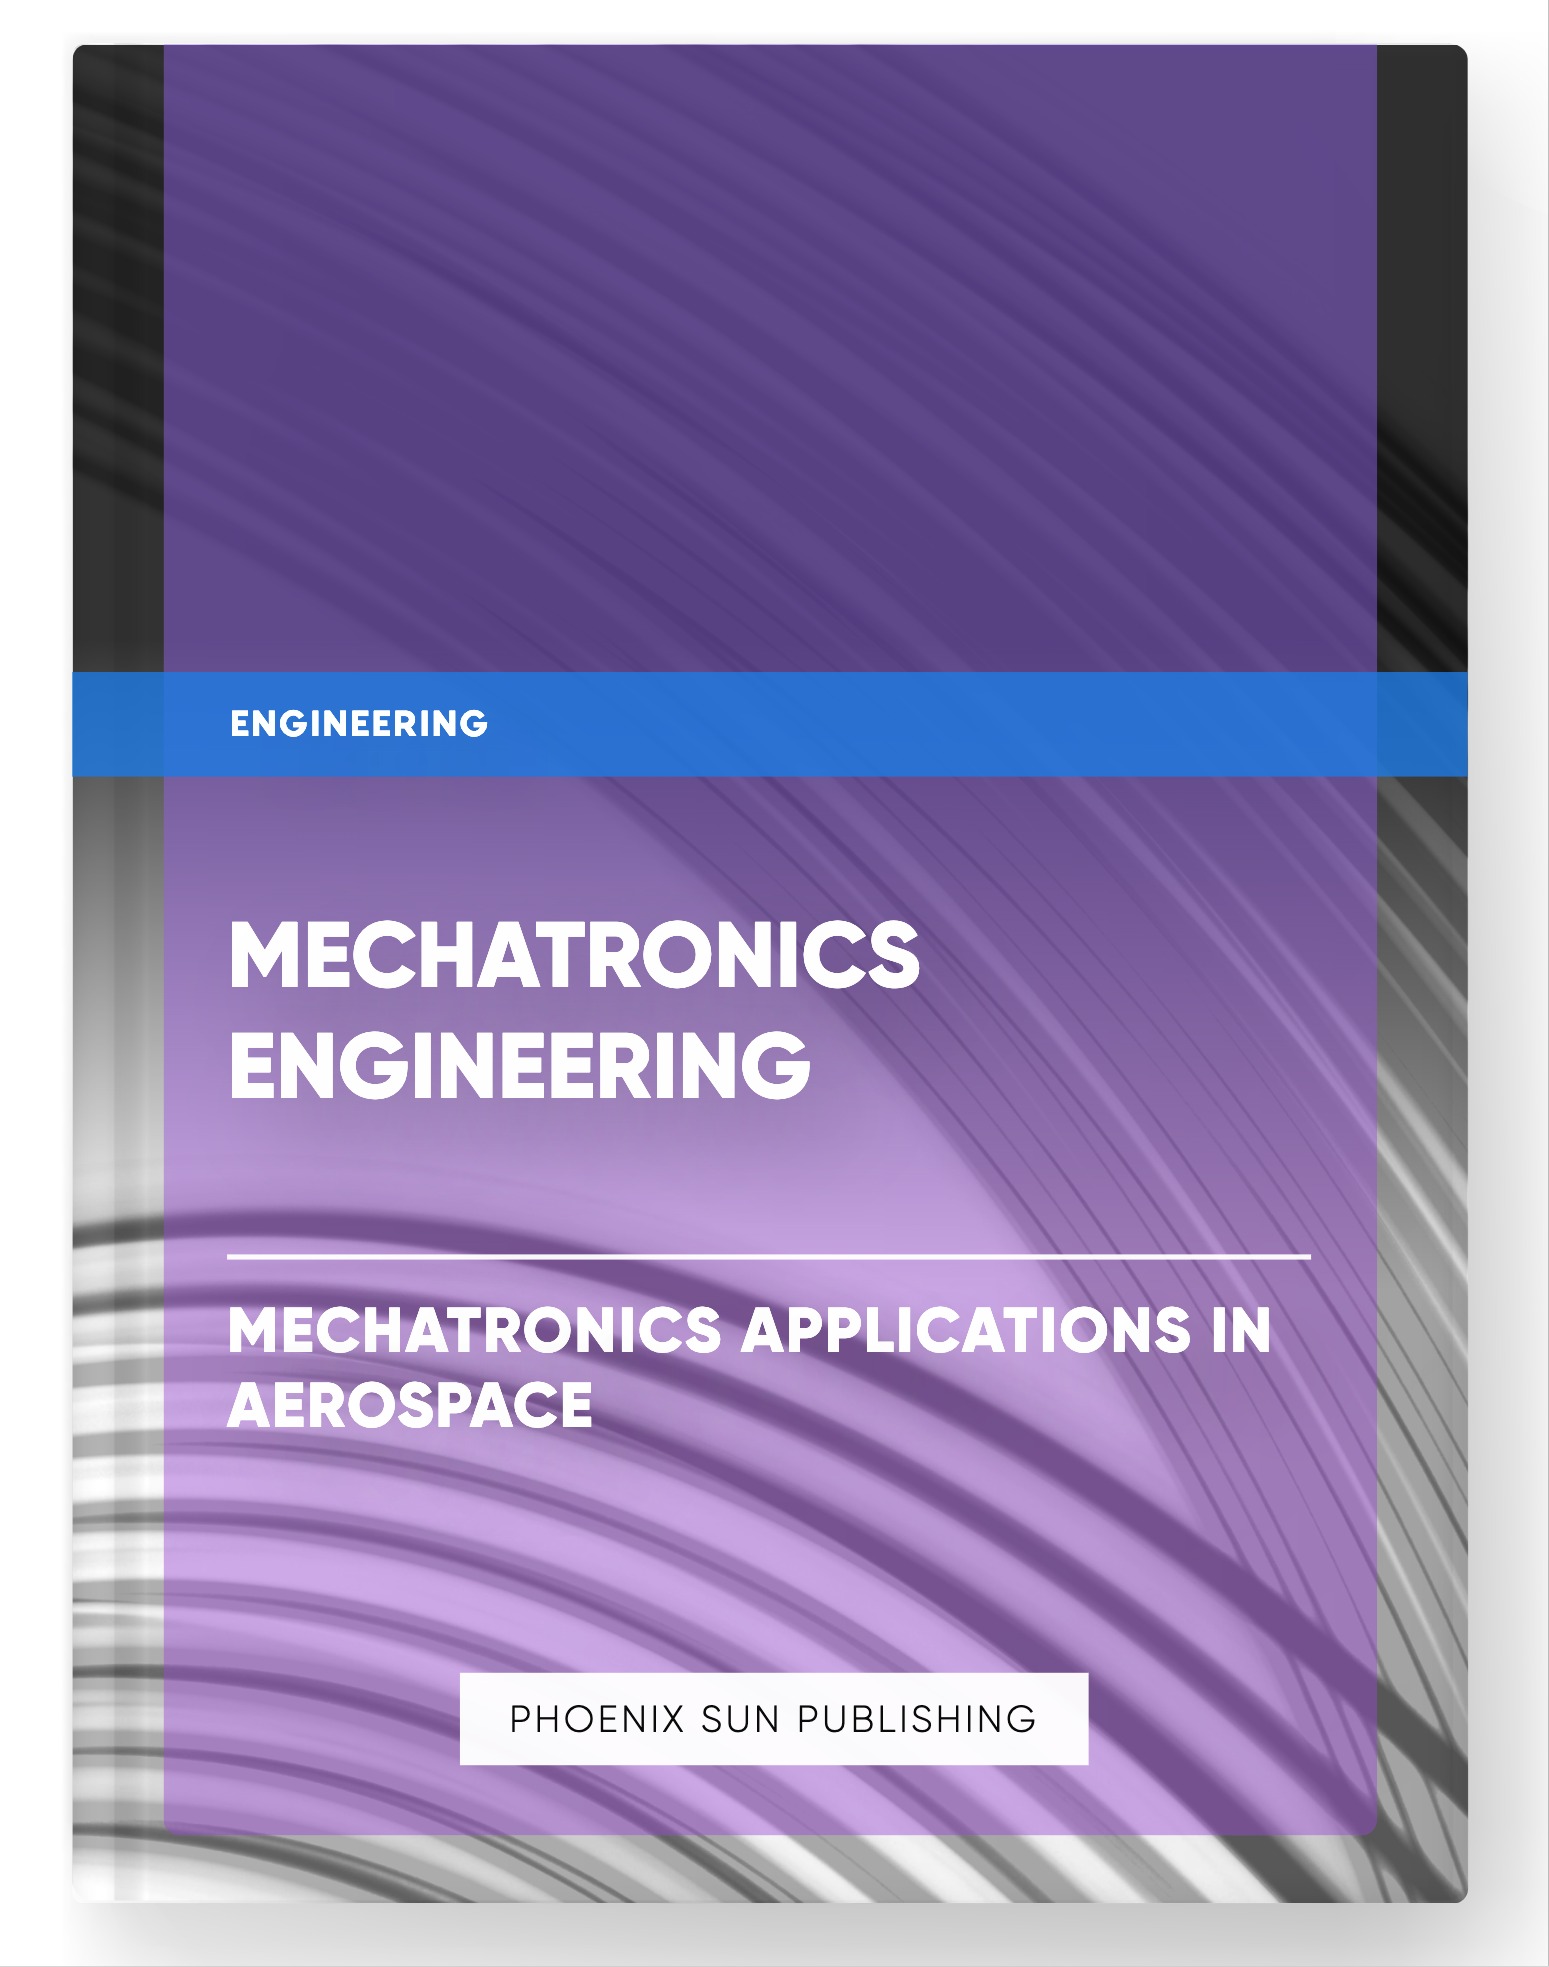 Mechatronics Engineering – Mechatronics Applications in Aerospace